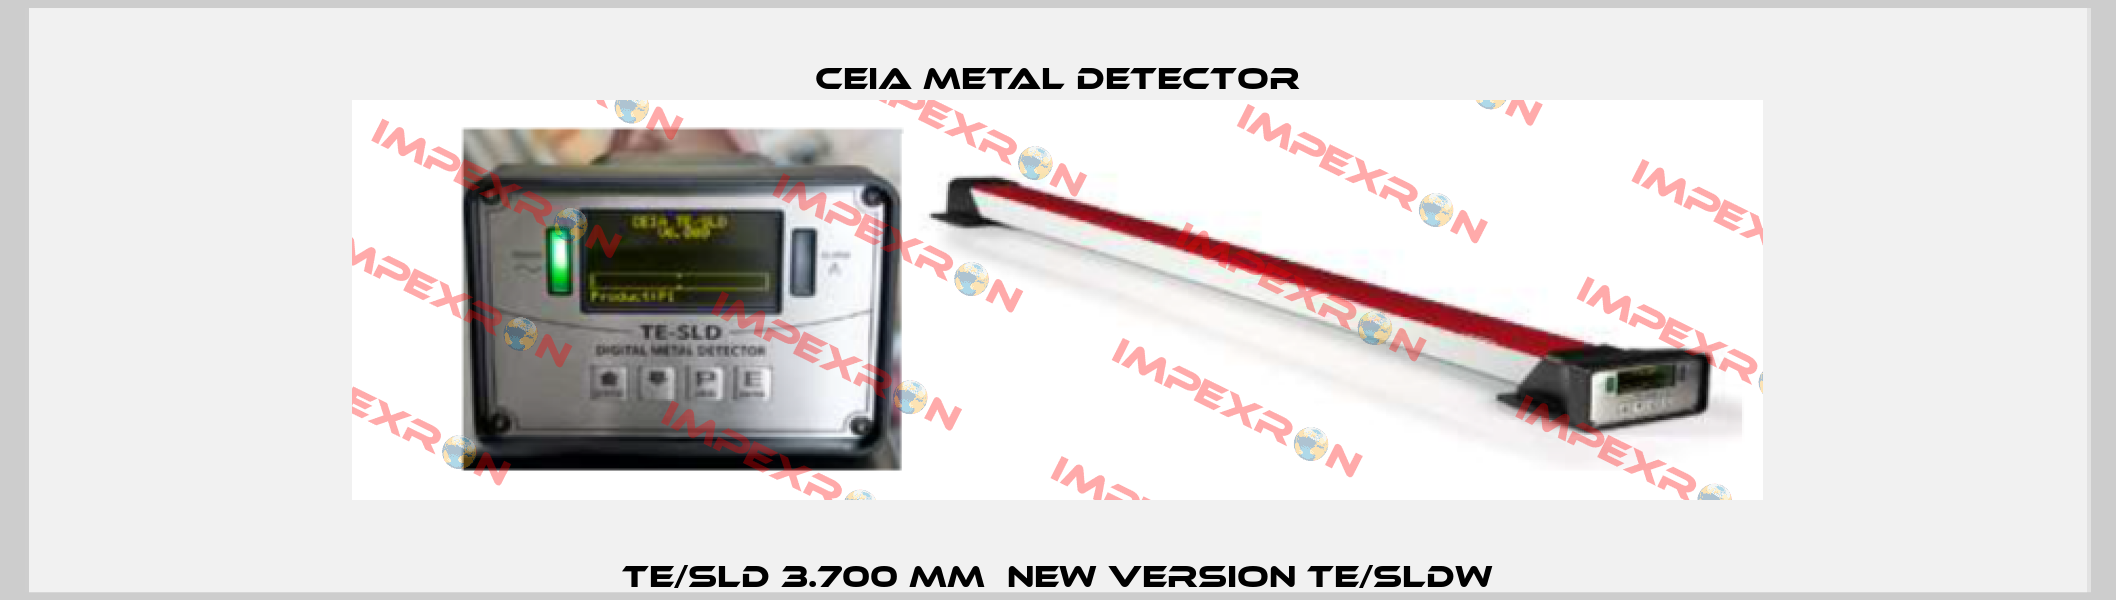 TE/SLD 3.700 mm  new version TE/SLDW CEIA METAL DETECTOR